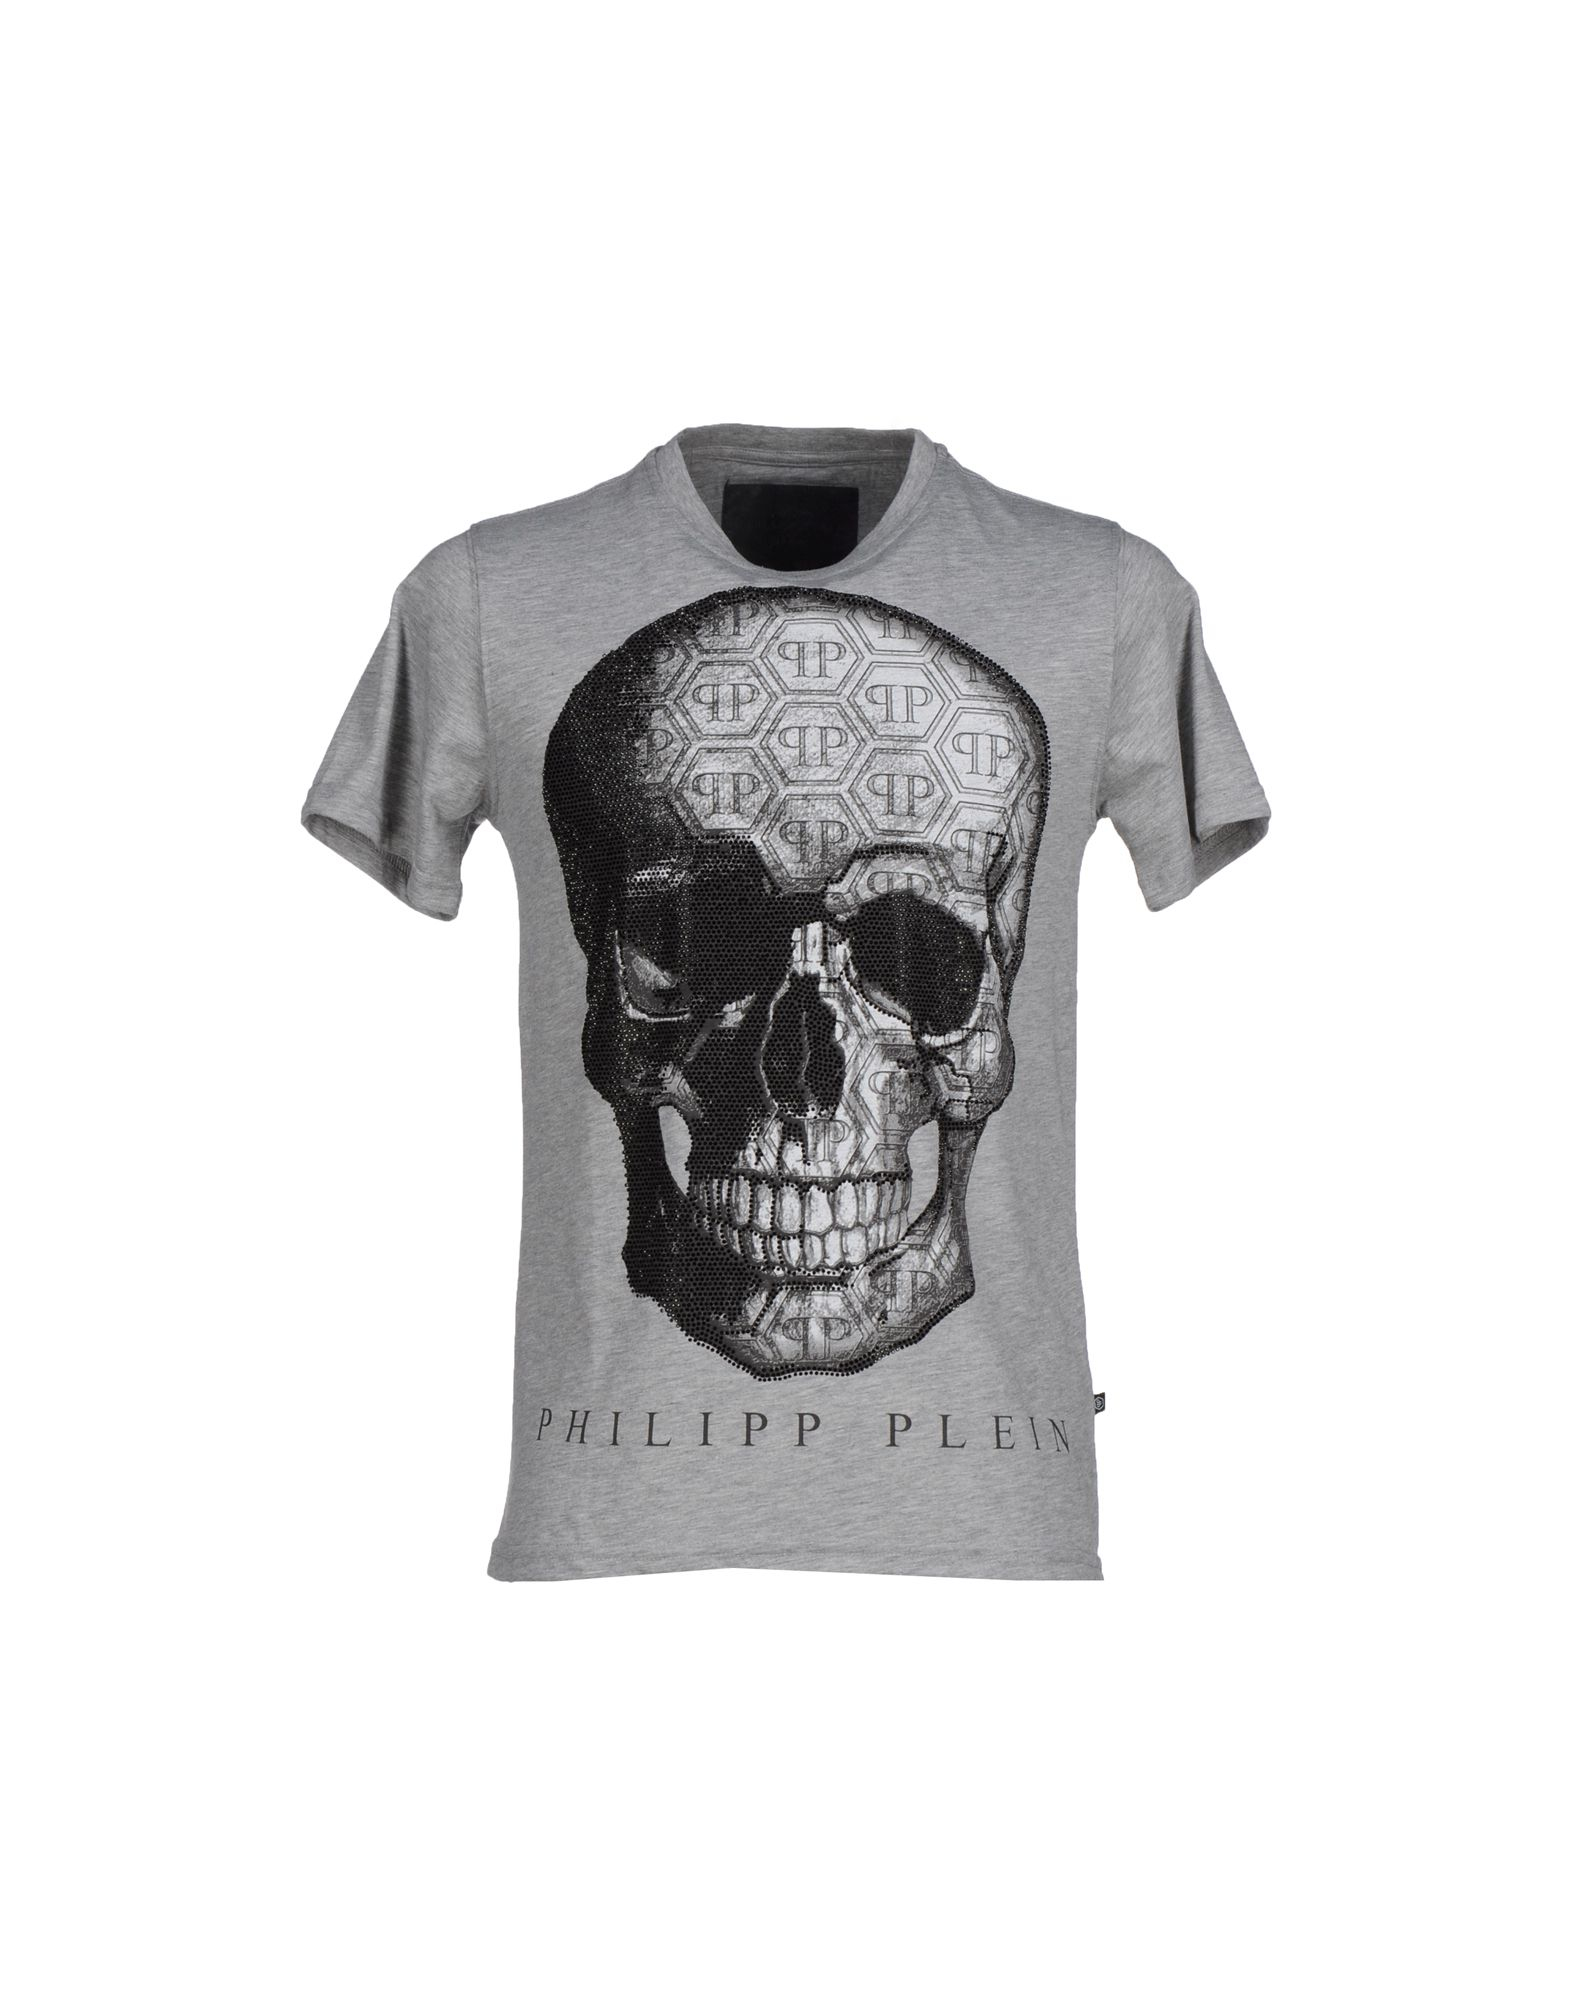 philipp plein t shirt grey